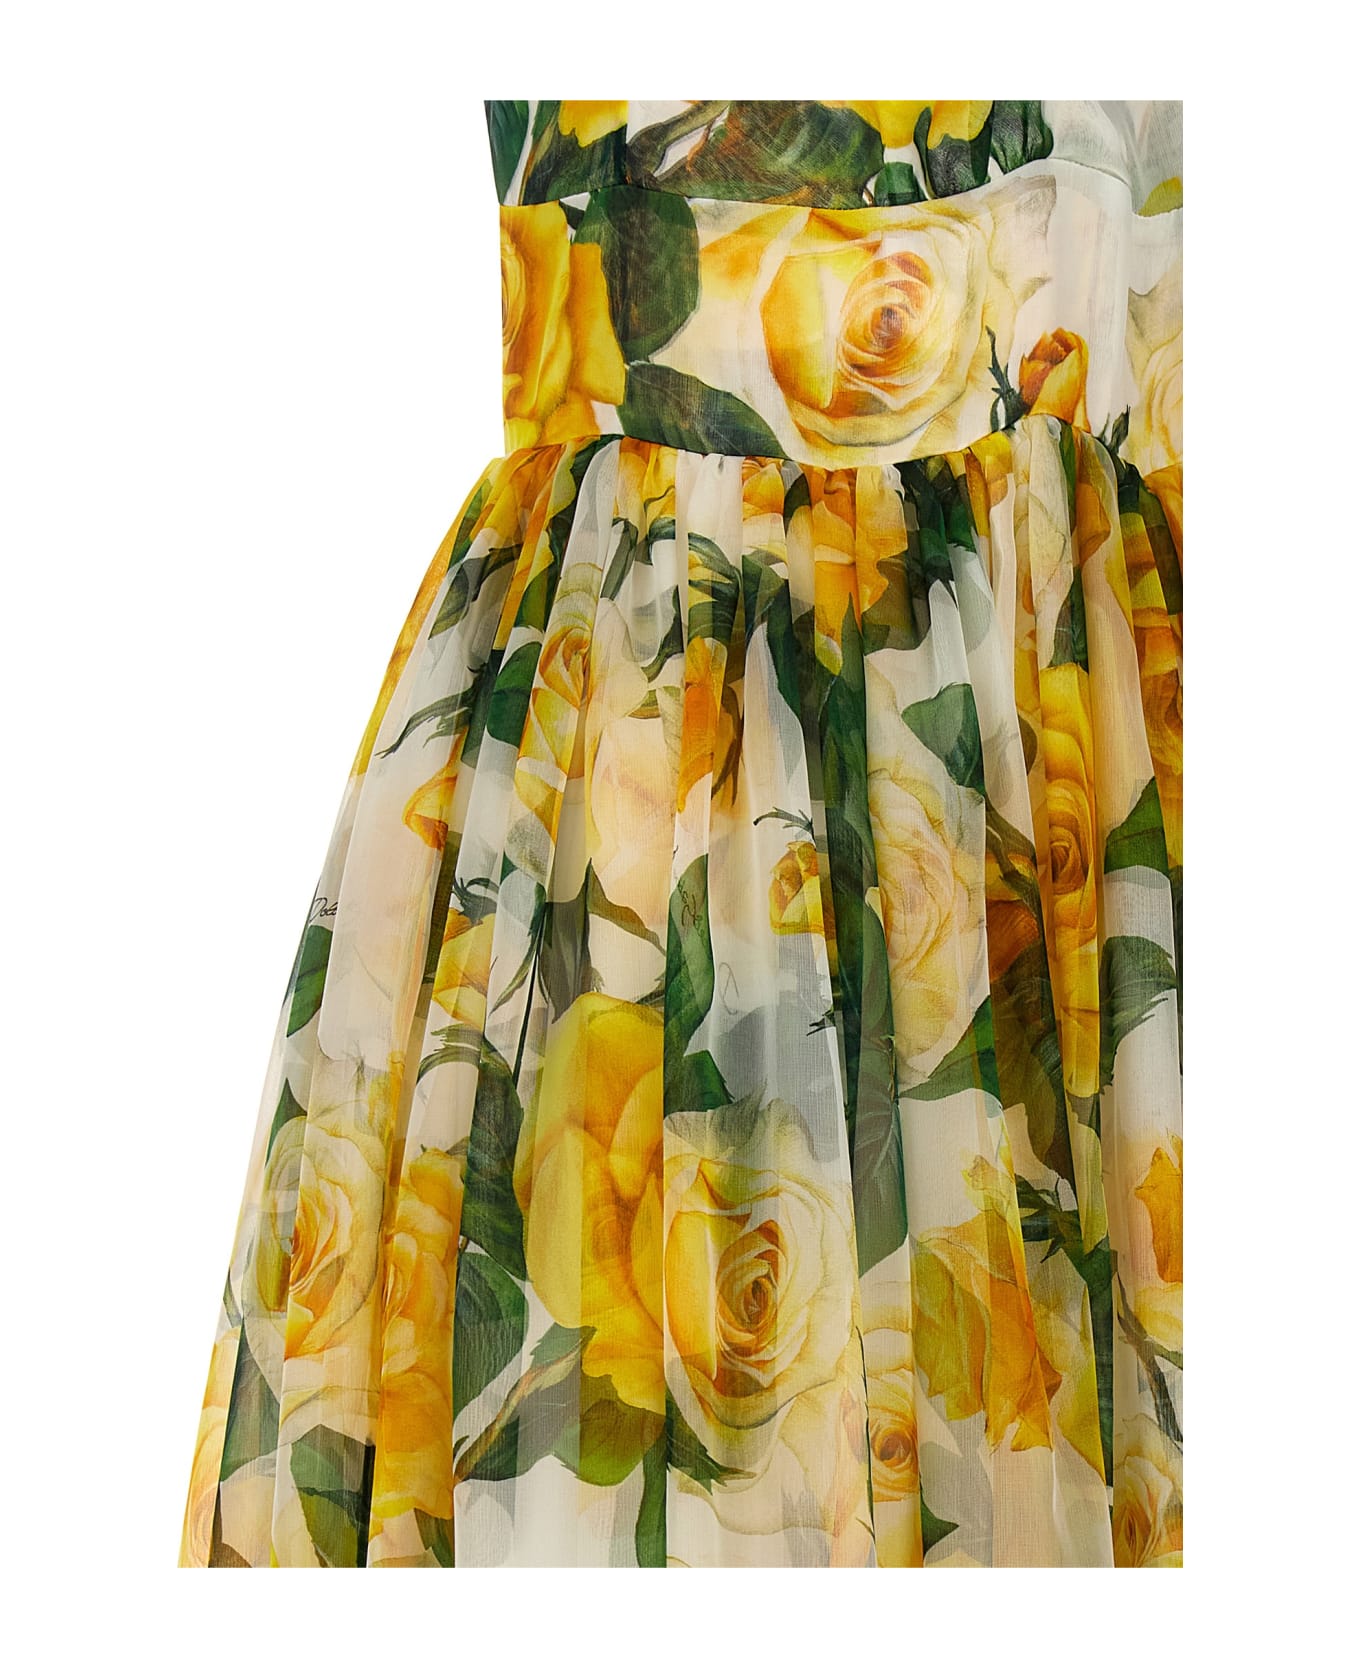 Dolce & Gabbana 'rose Gialle' Dress - Yellow